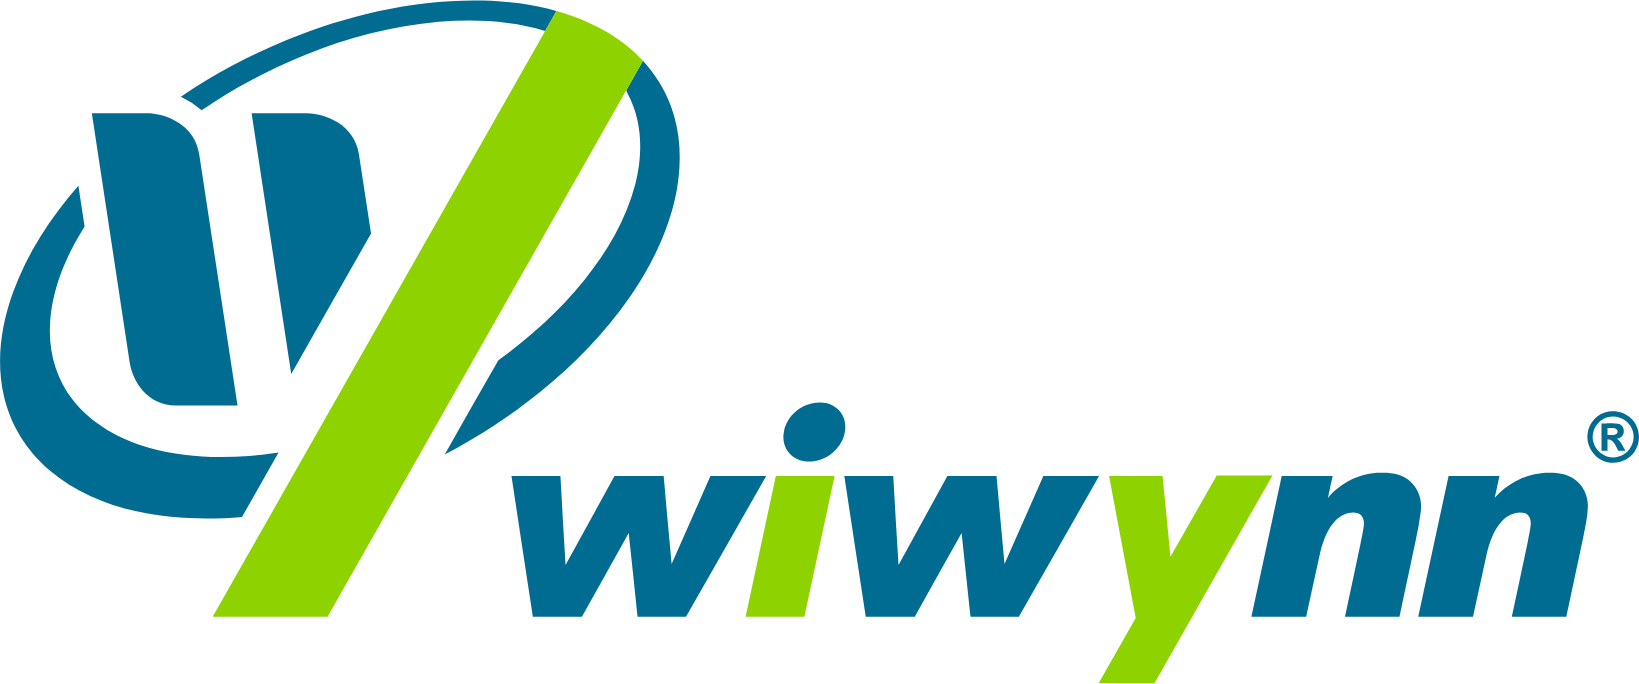 Wiwynn logo large (transparent PNG)